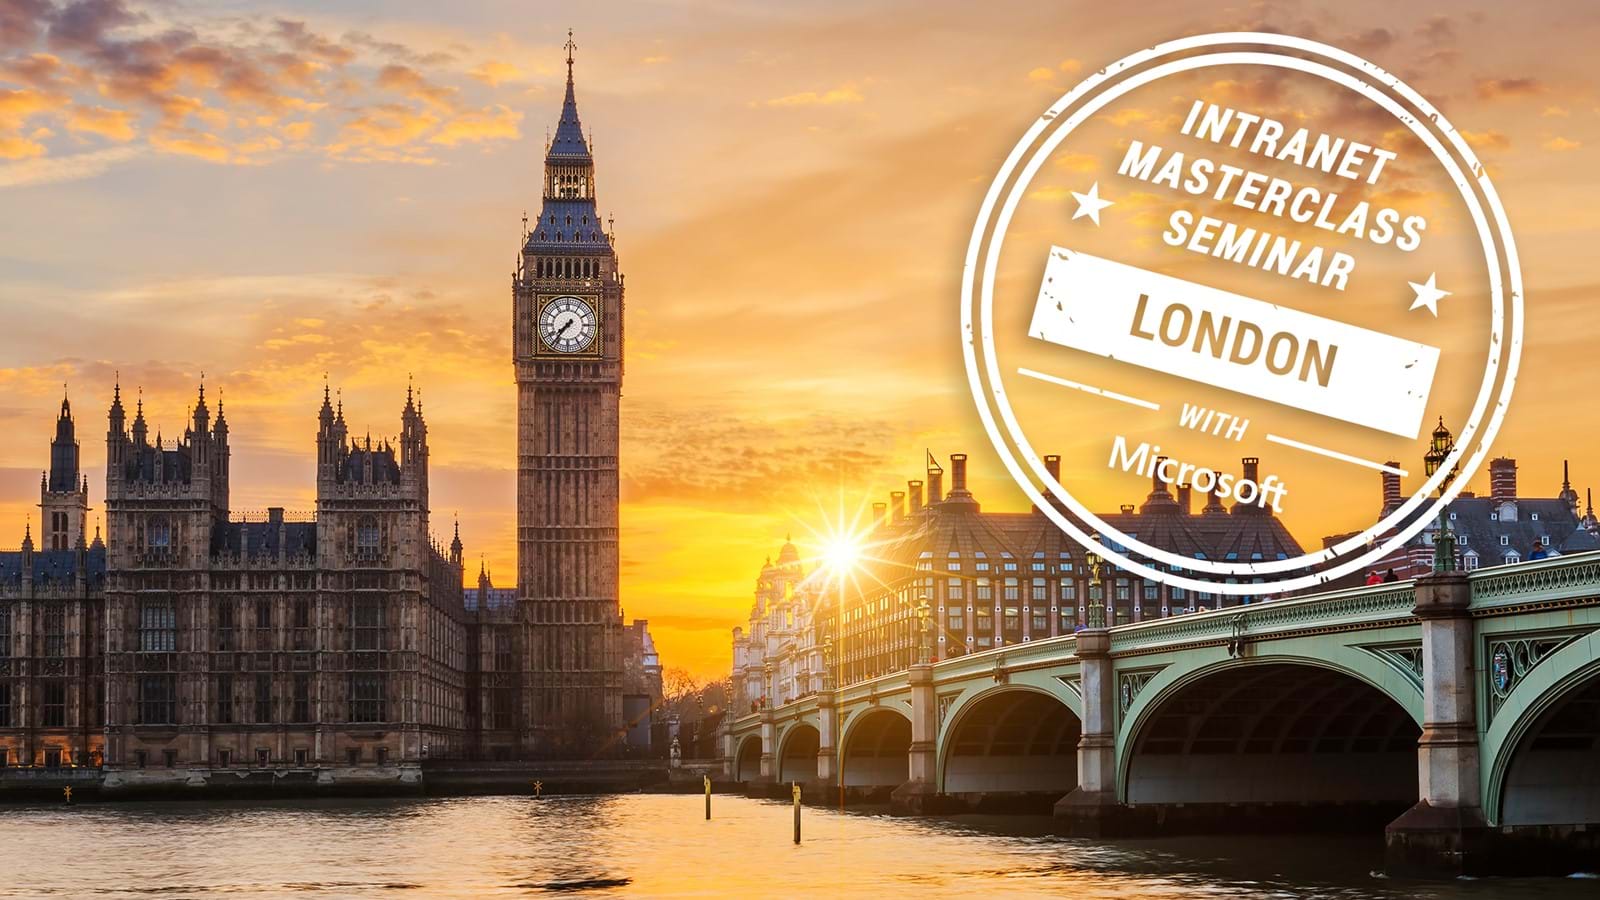 Unily Intranet Masterclass Seminar in London 